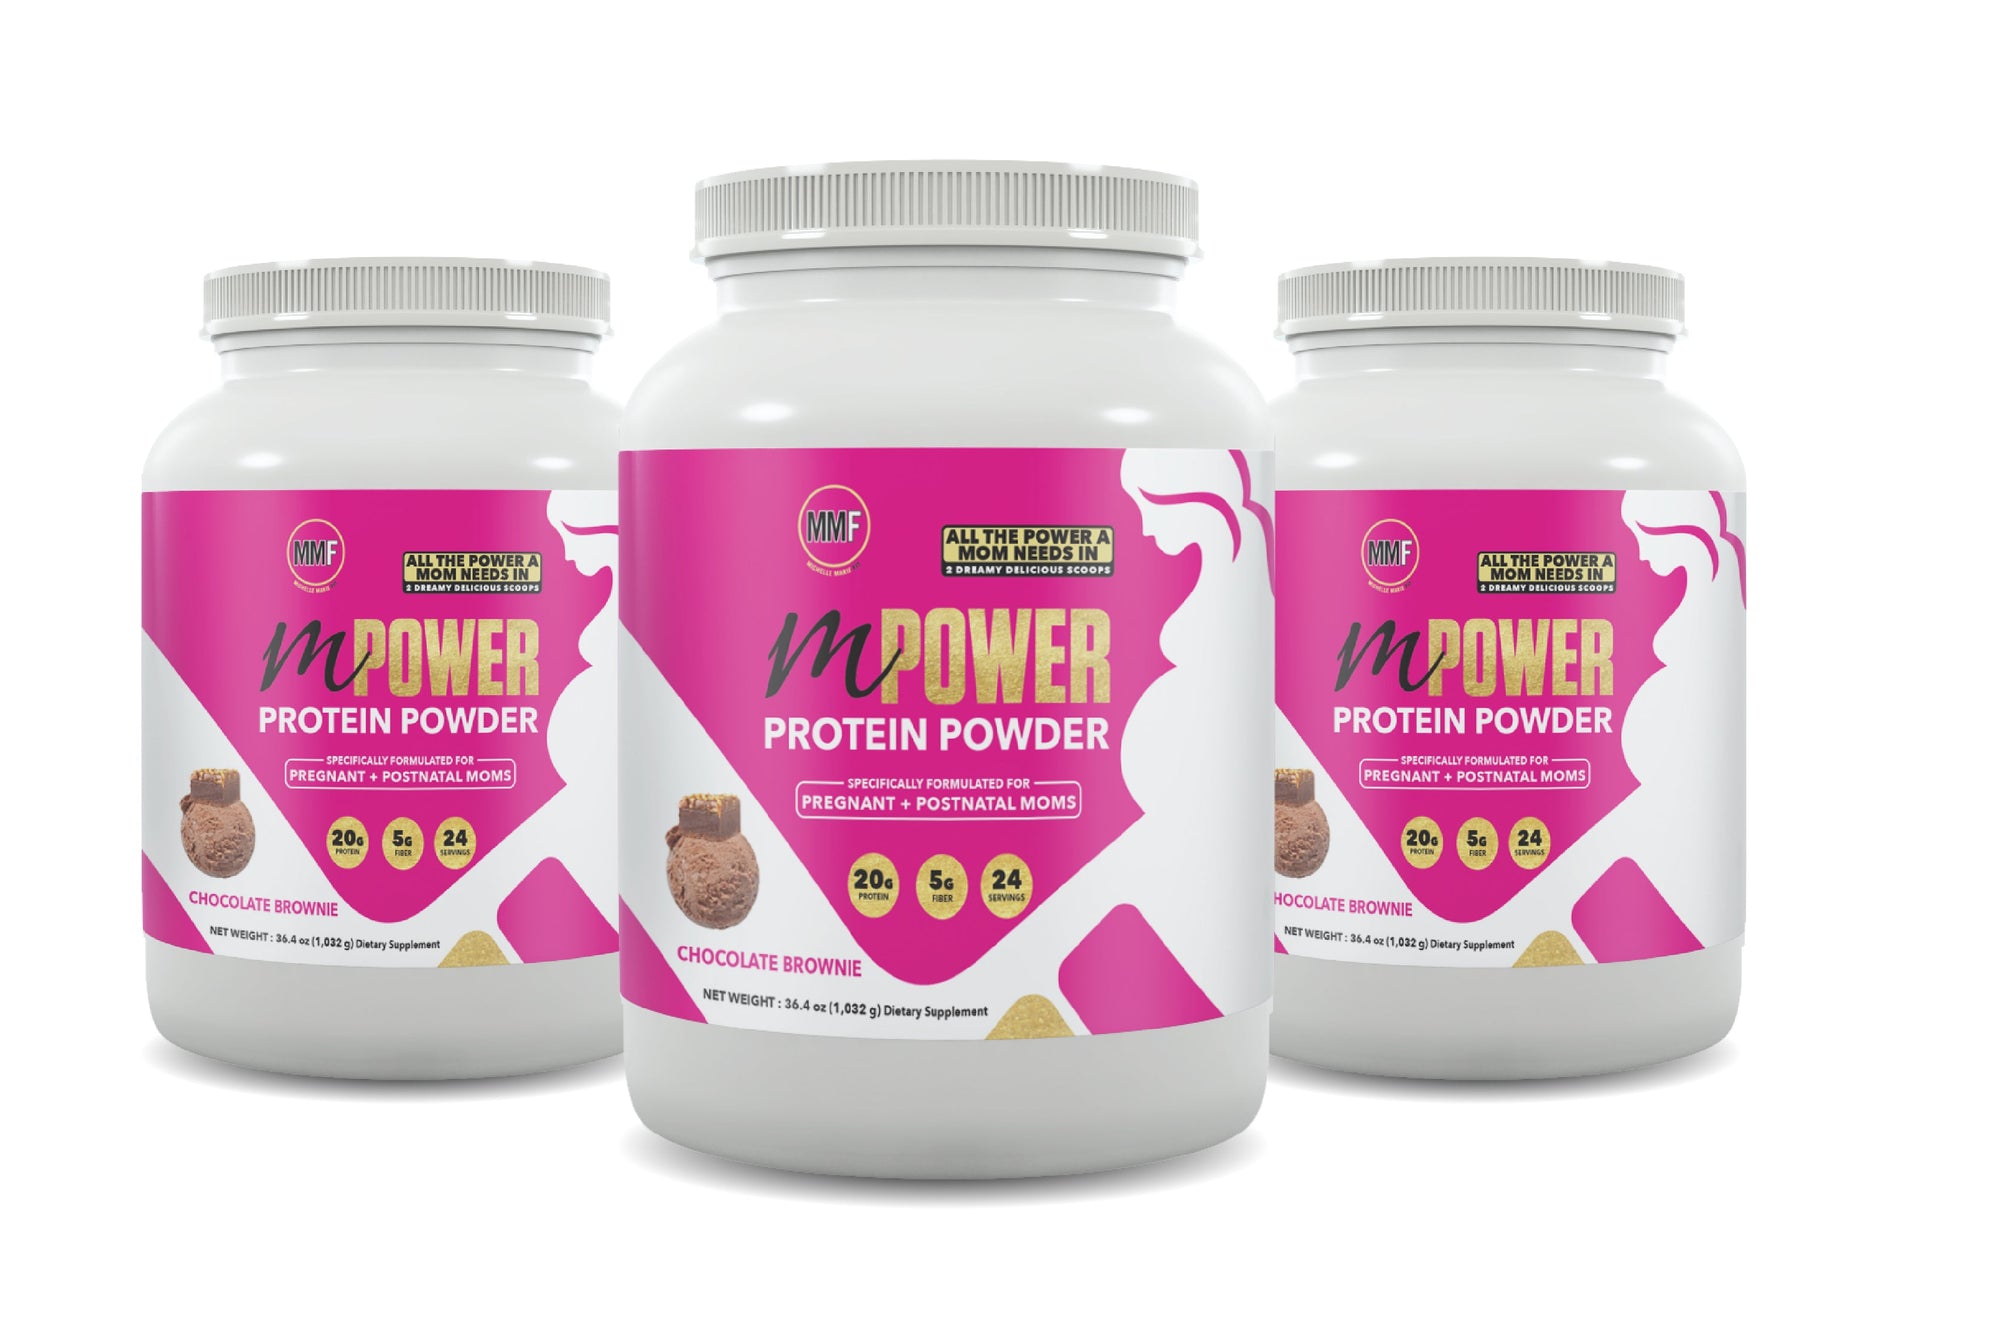  protein powder for pregnancy - safe